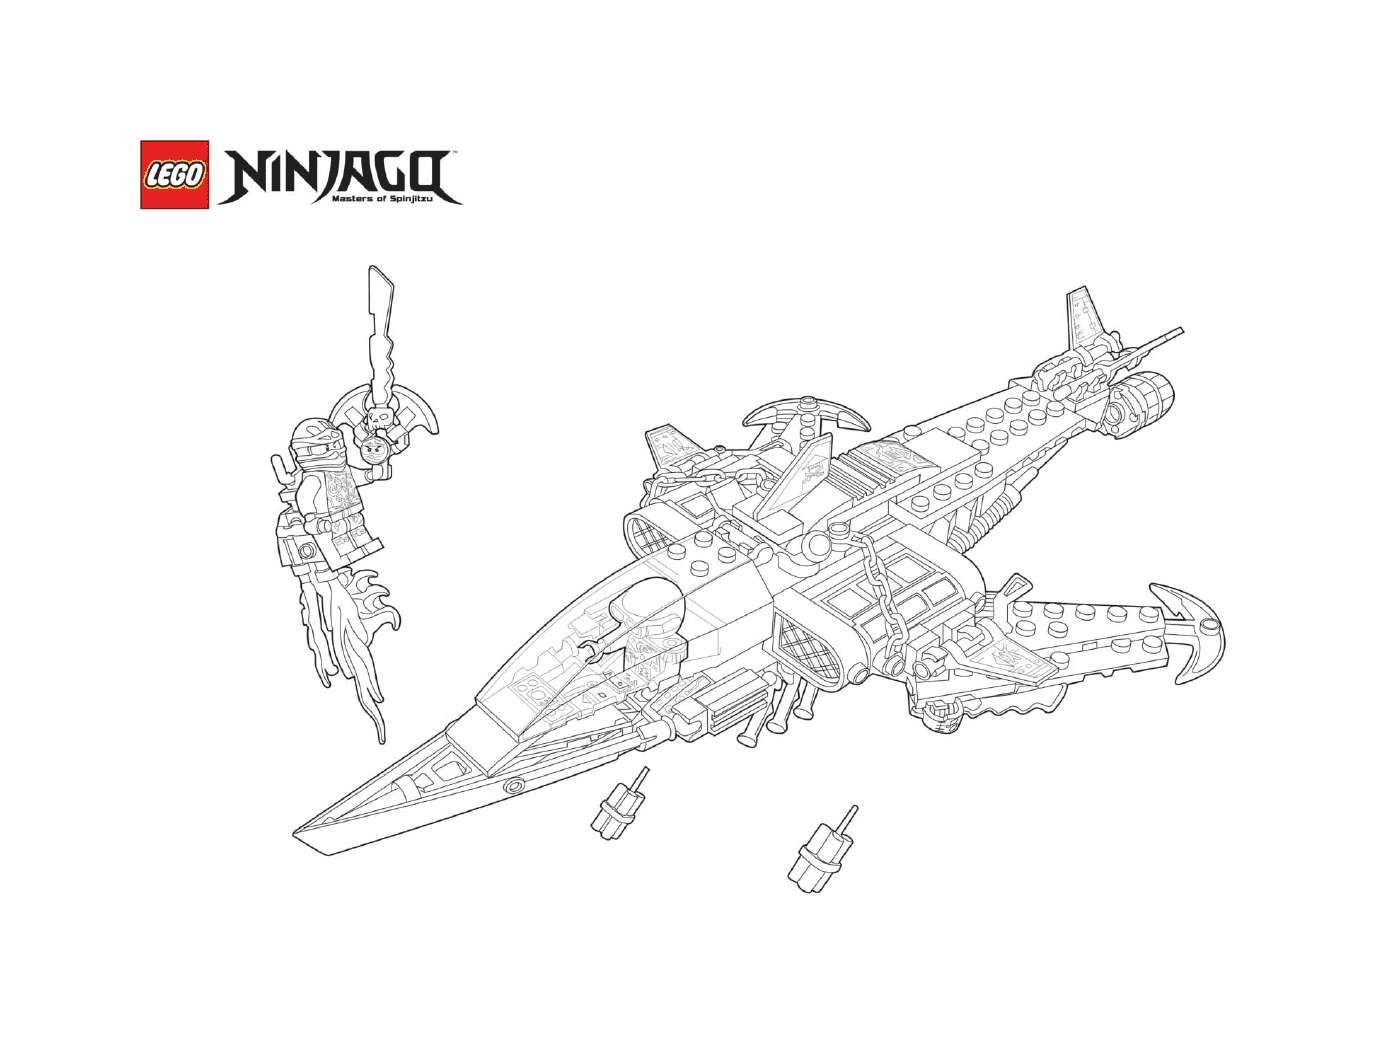  Ninjago ship cursed 